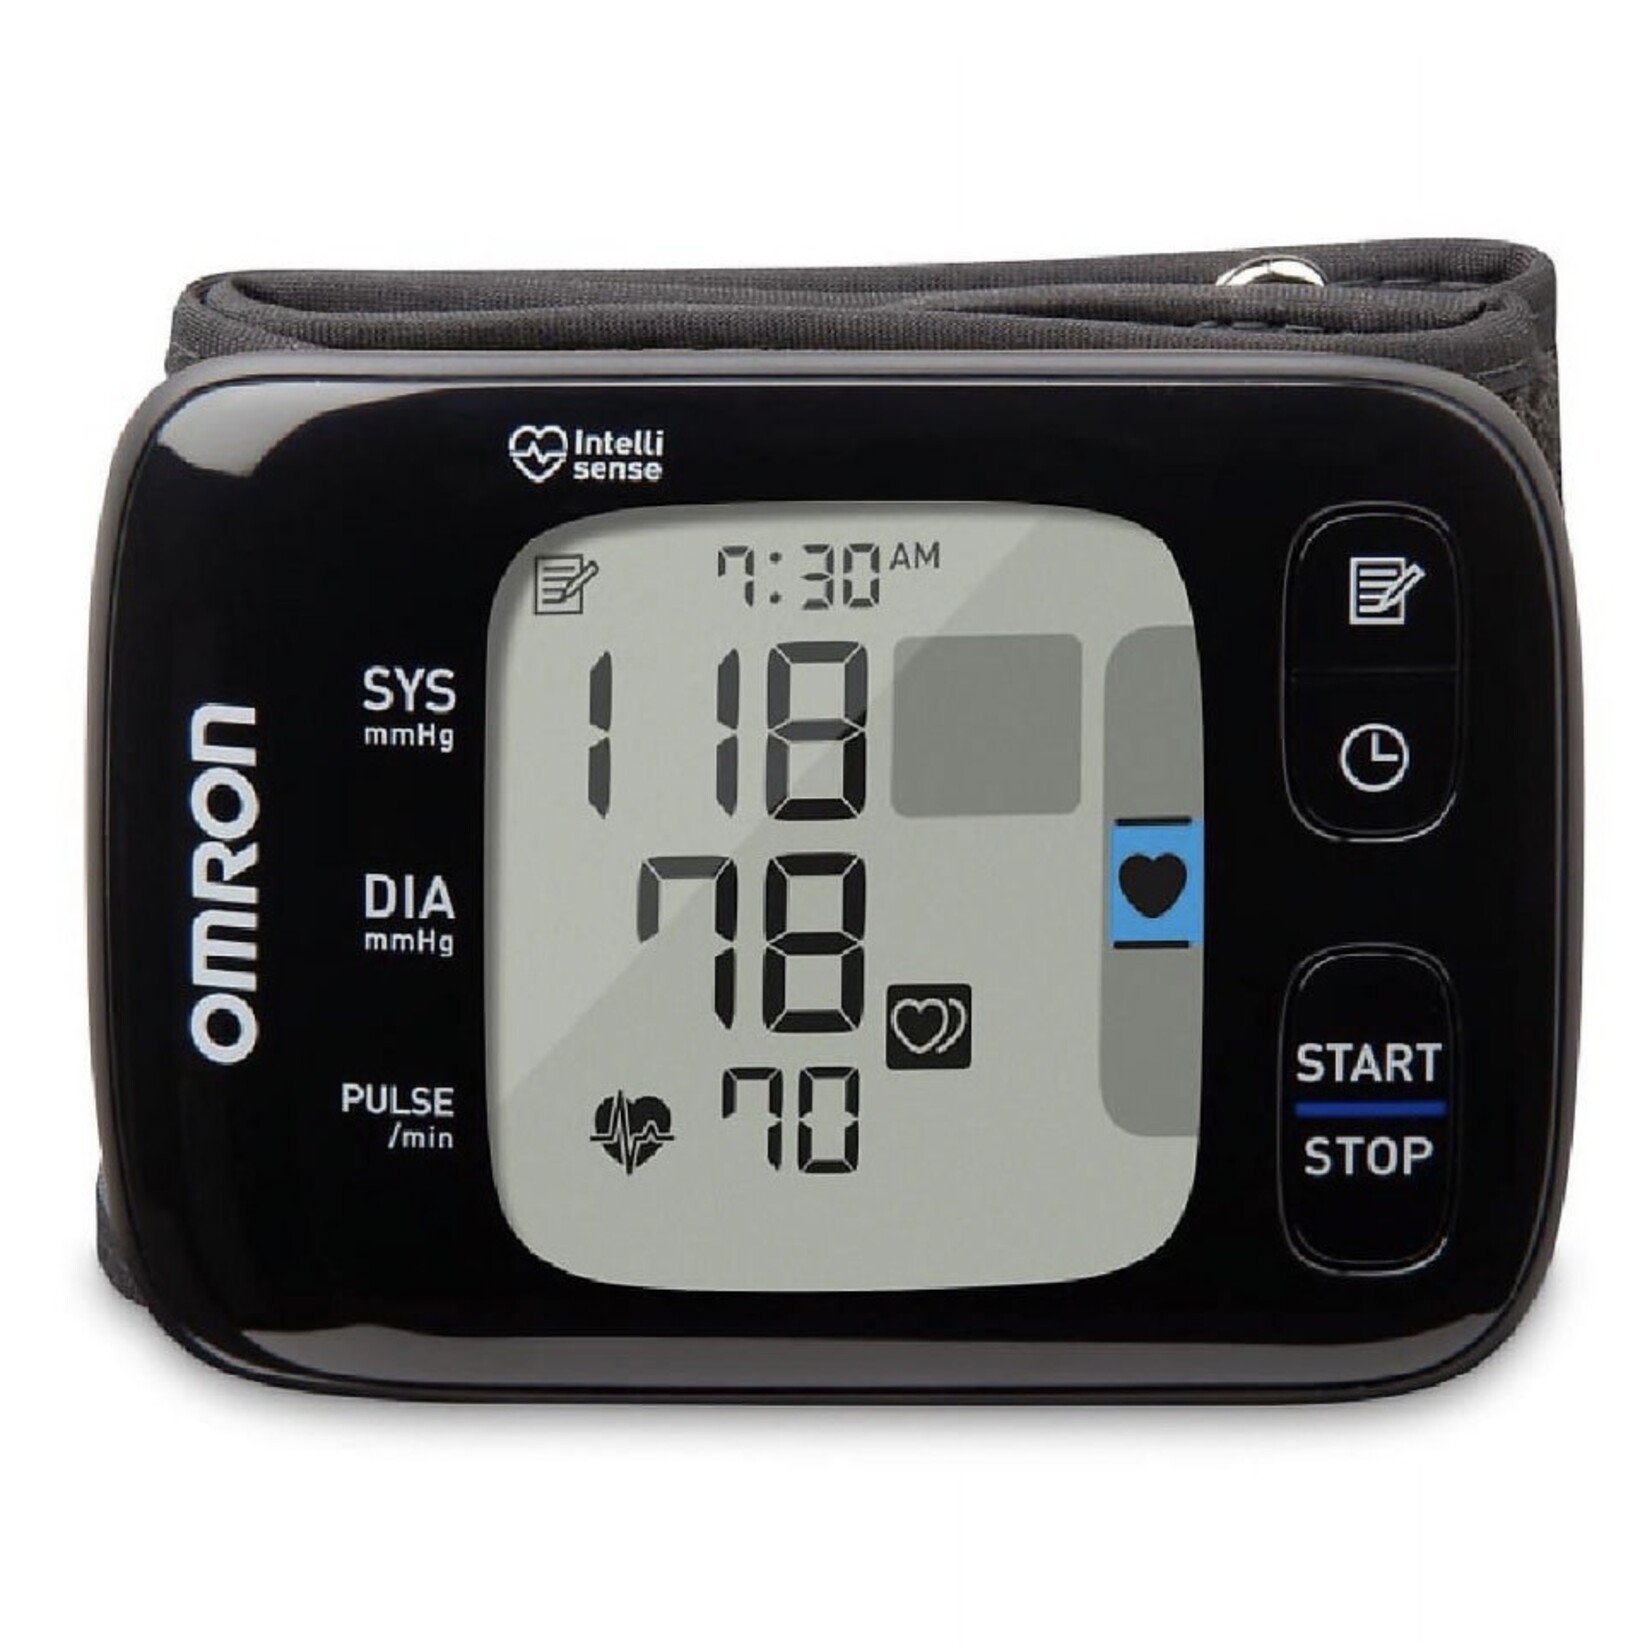 Discount Central OMRON 7 Series Blood Pressure Monitor (BP6350), Portable Wireless Wrist Monitor, Digital Bluetooth B